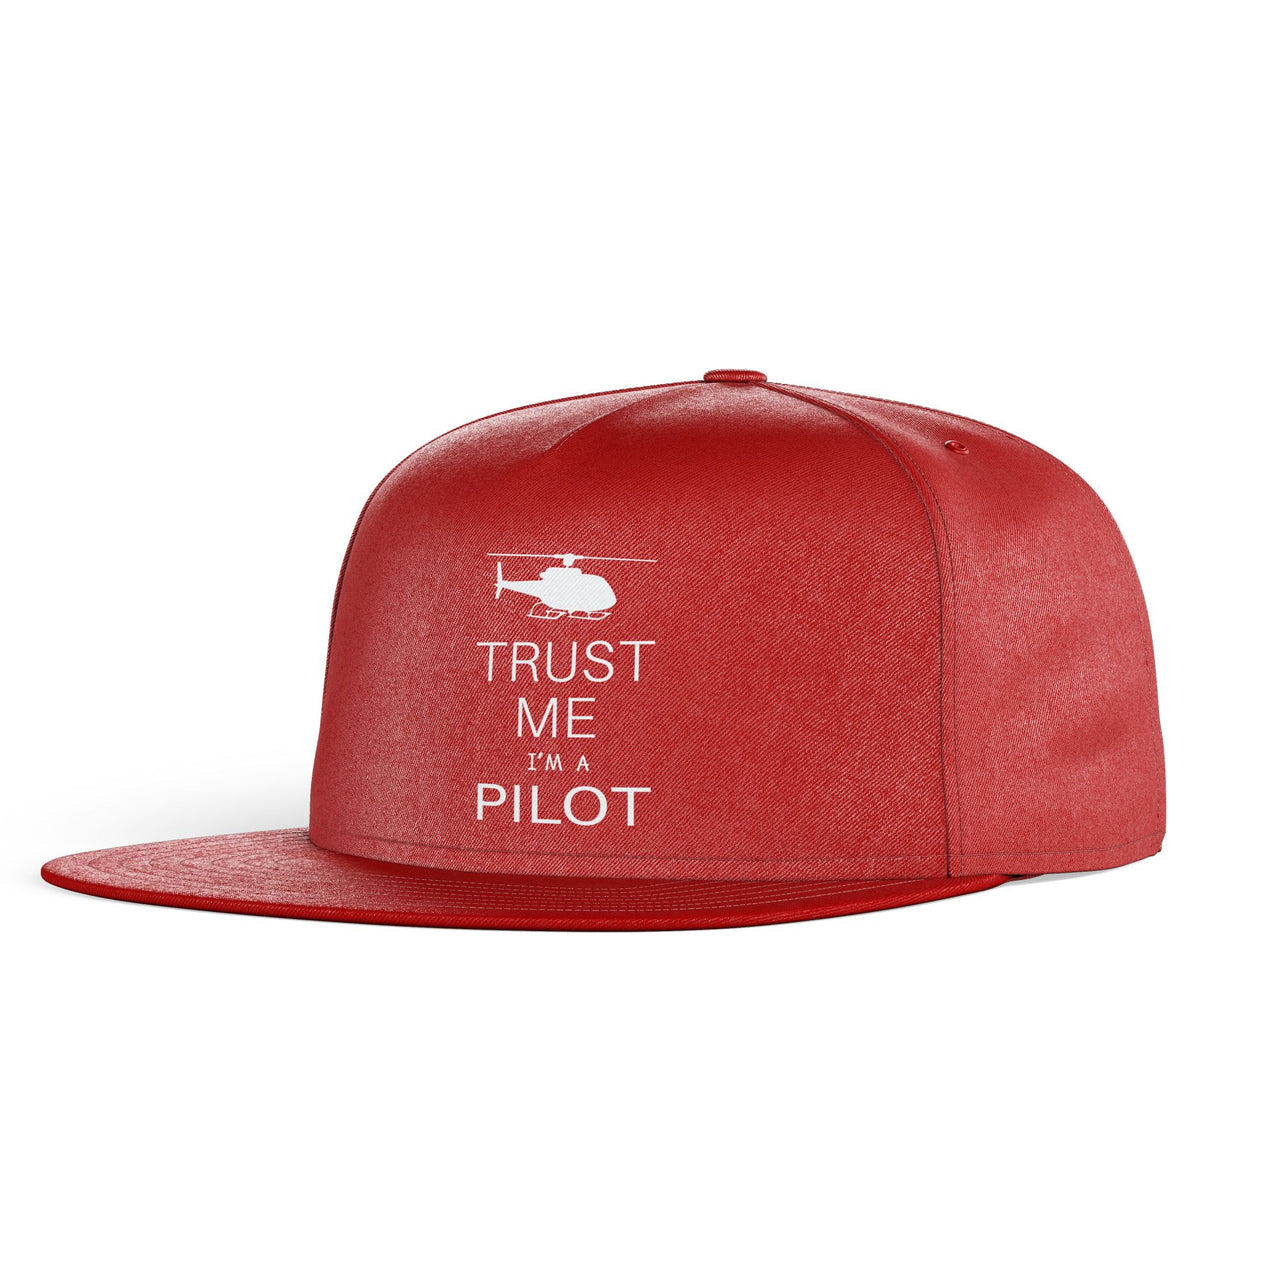 Trust Me I'm a Pilot (Helicopter) Designed Snapback Caps & Hats